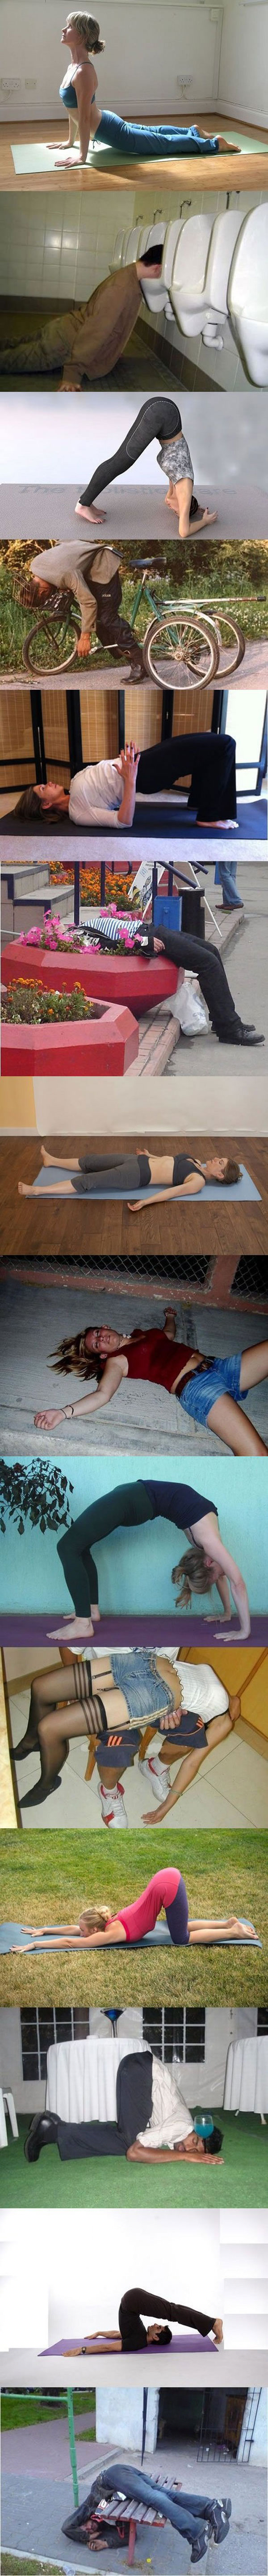 irish yoga, yoga versus drinking, drunk poses versus yoga poses